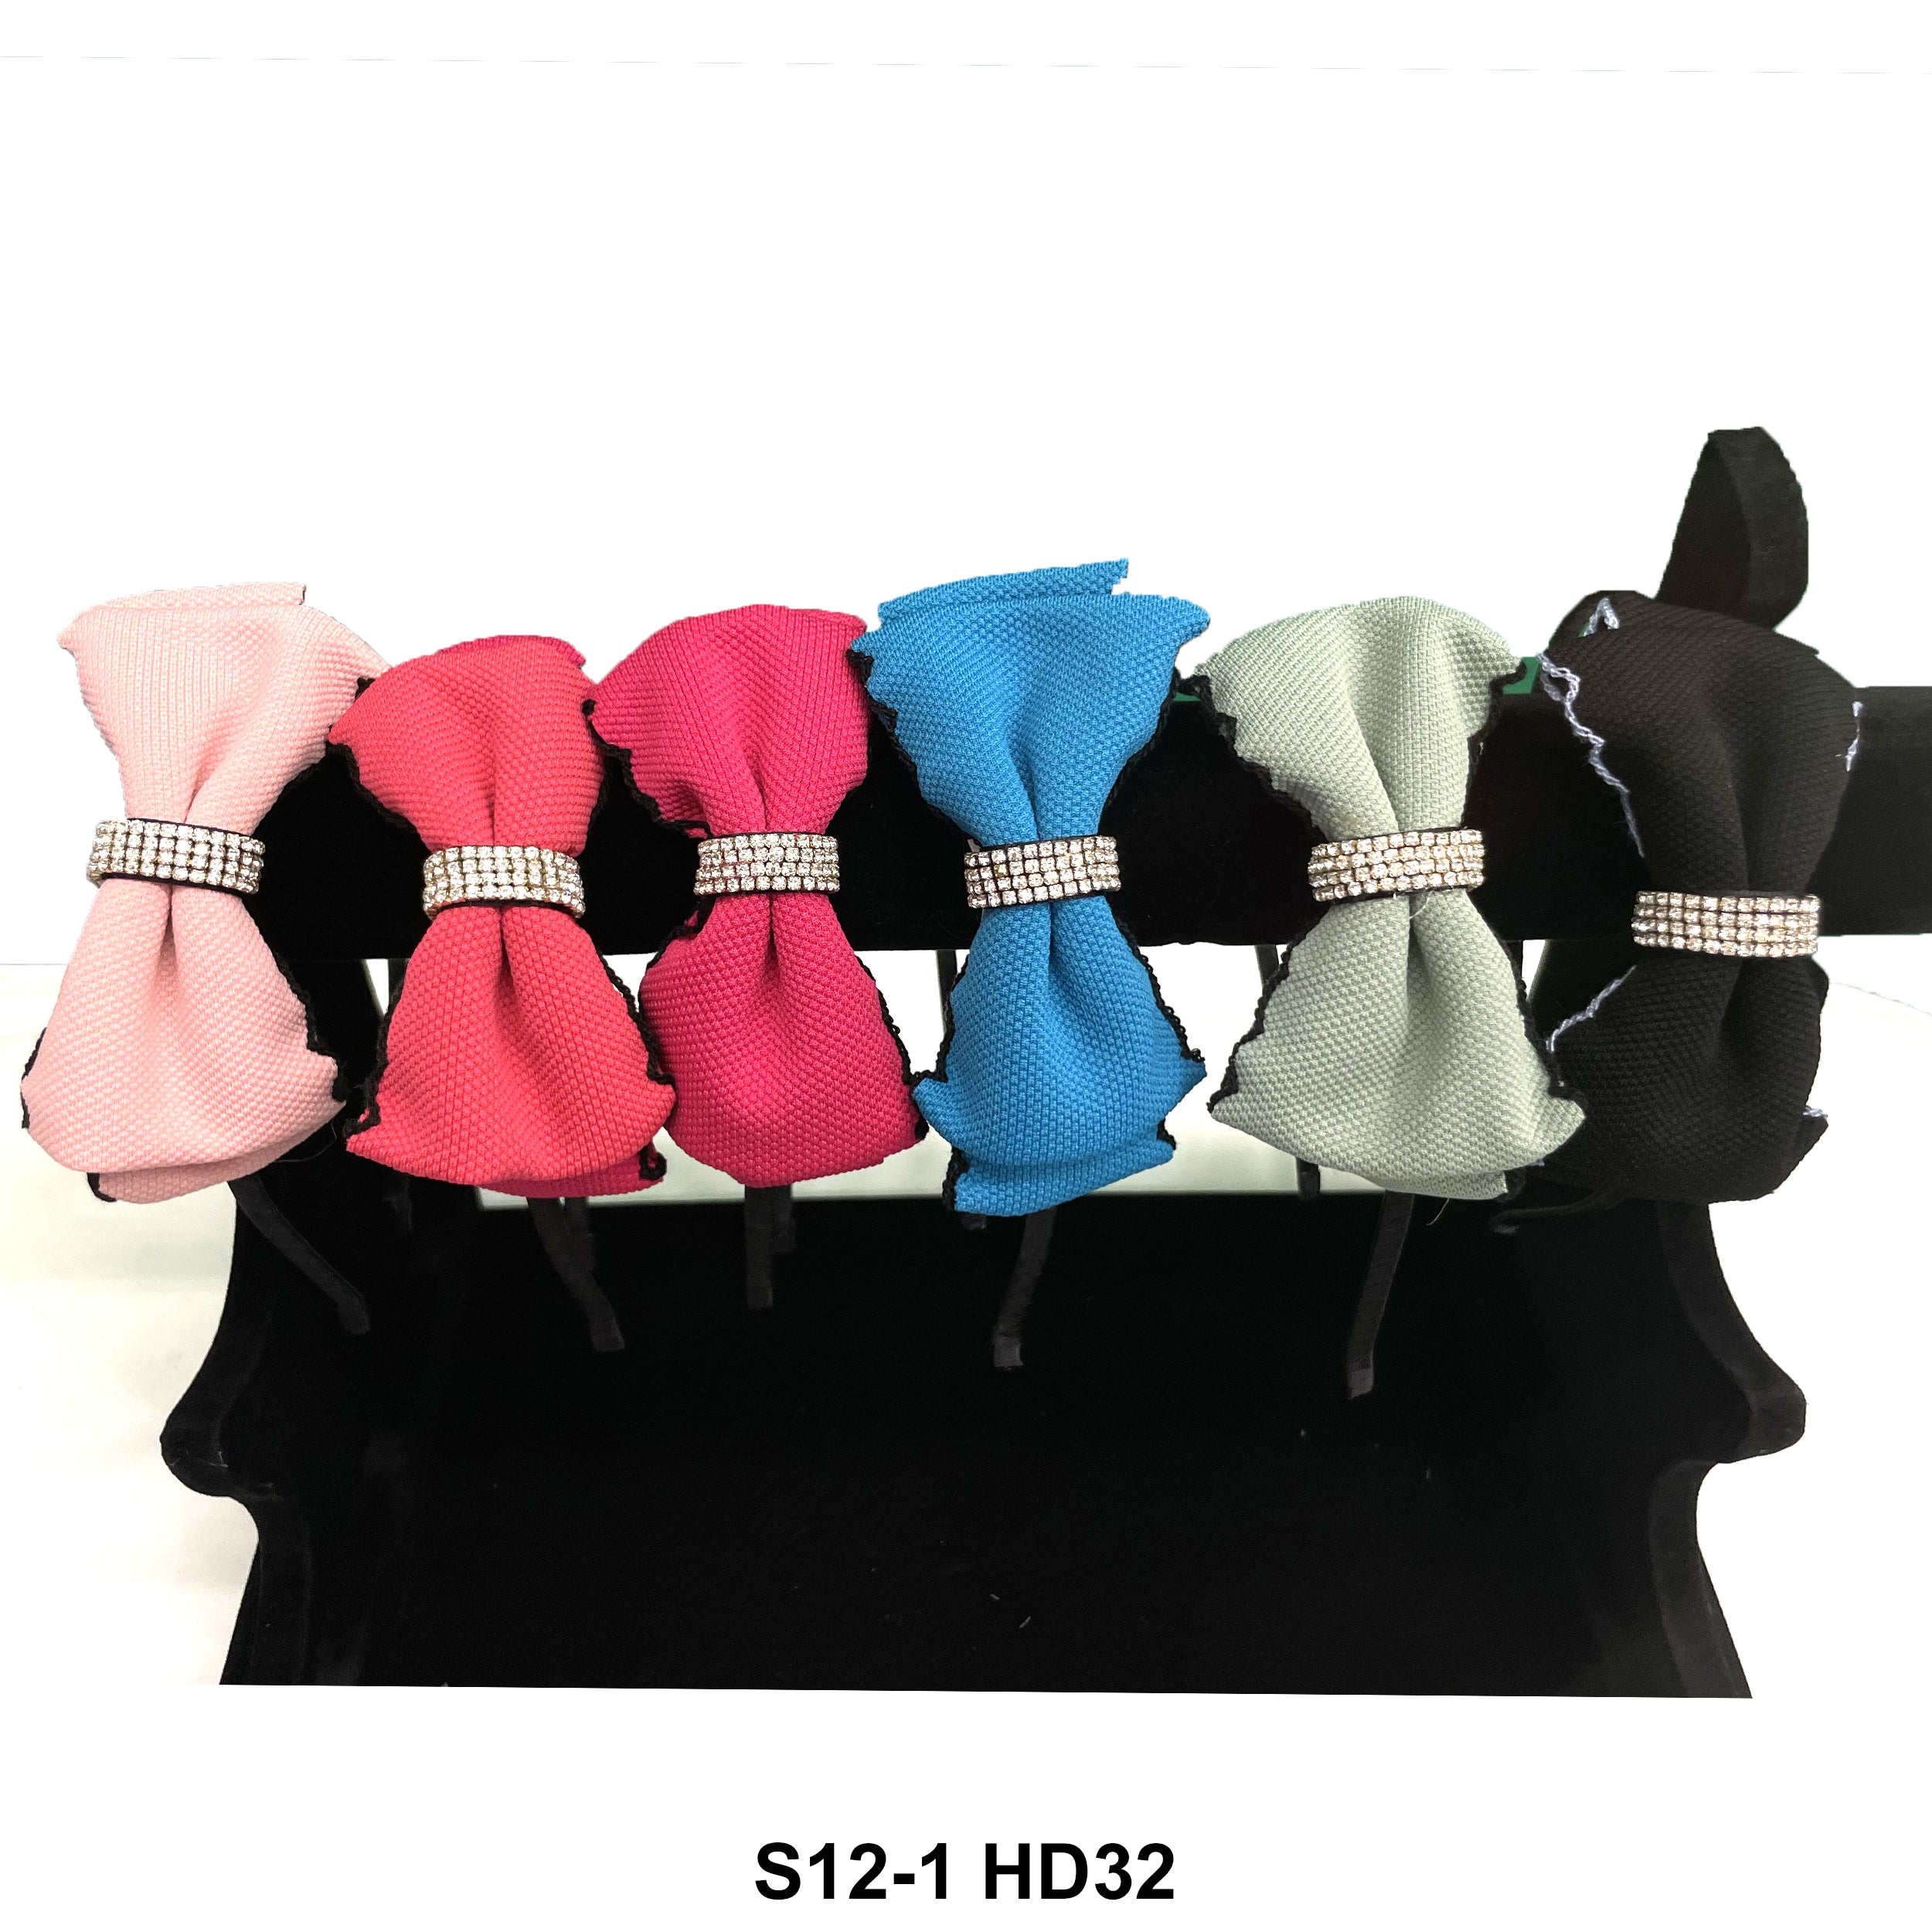 Fashion Headbands S12-1HD32 PK